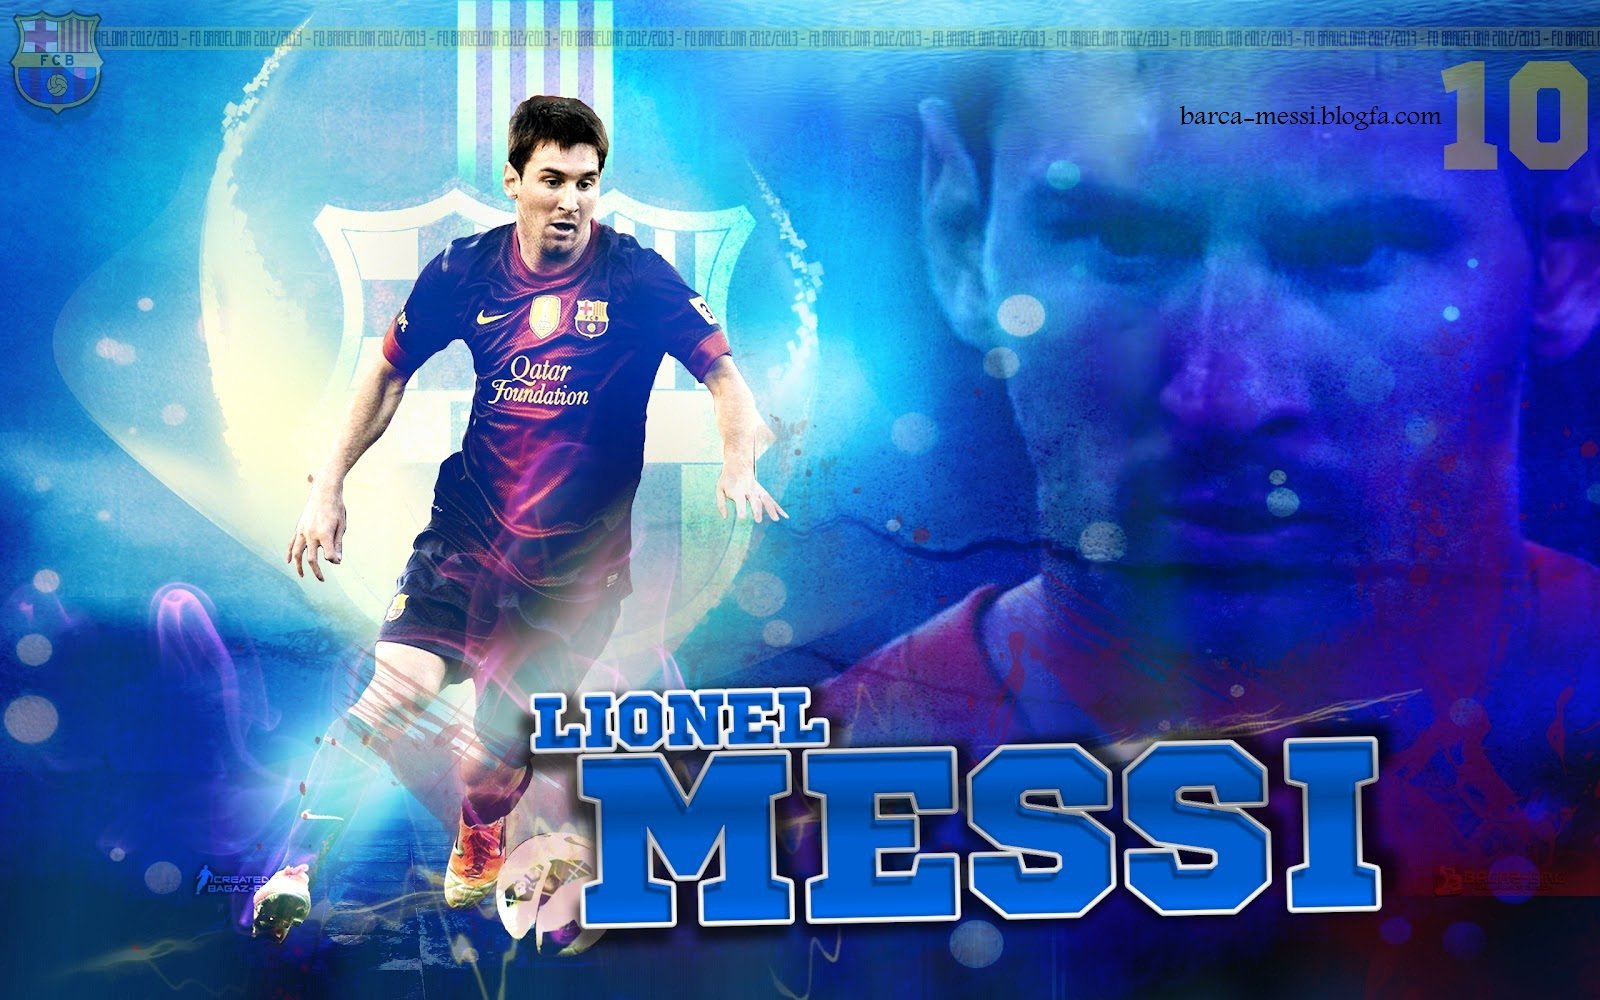 Messi wallpaper HDjpg